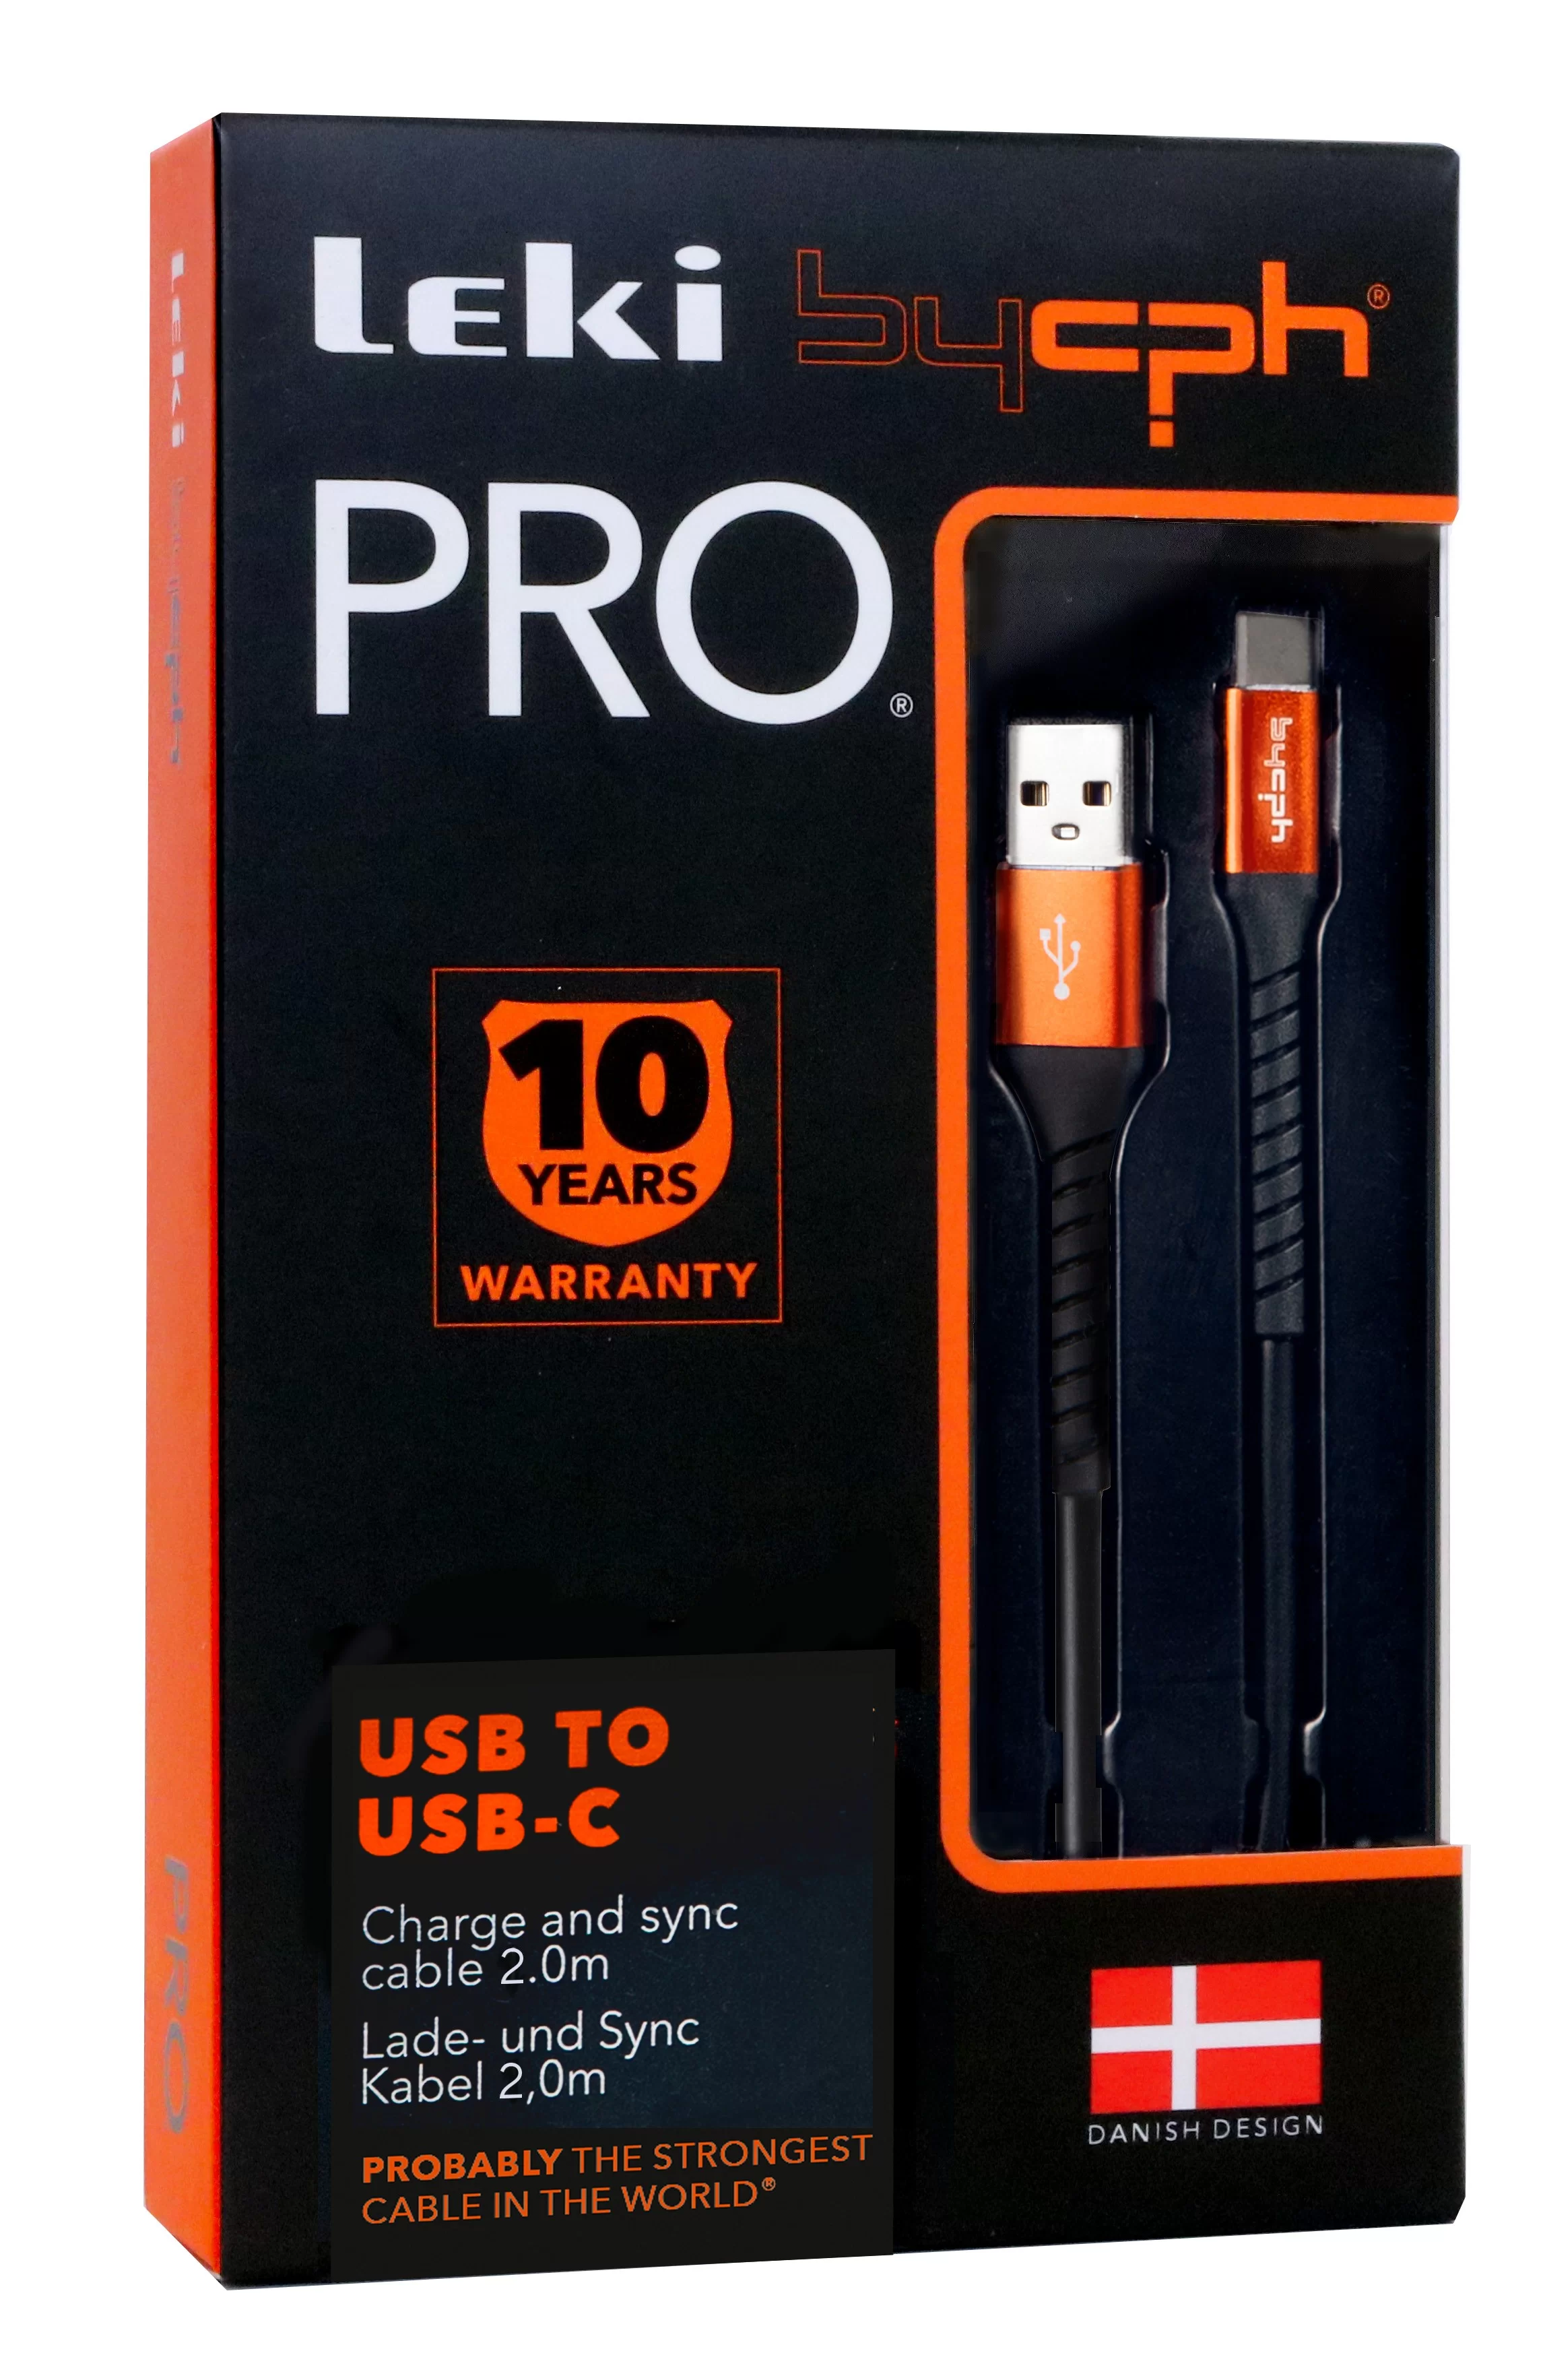 Bycph Pro - USB USB-C Kabel (2.0mtr)